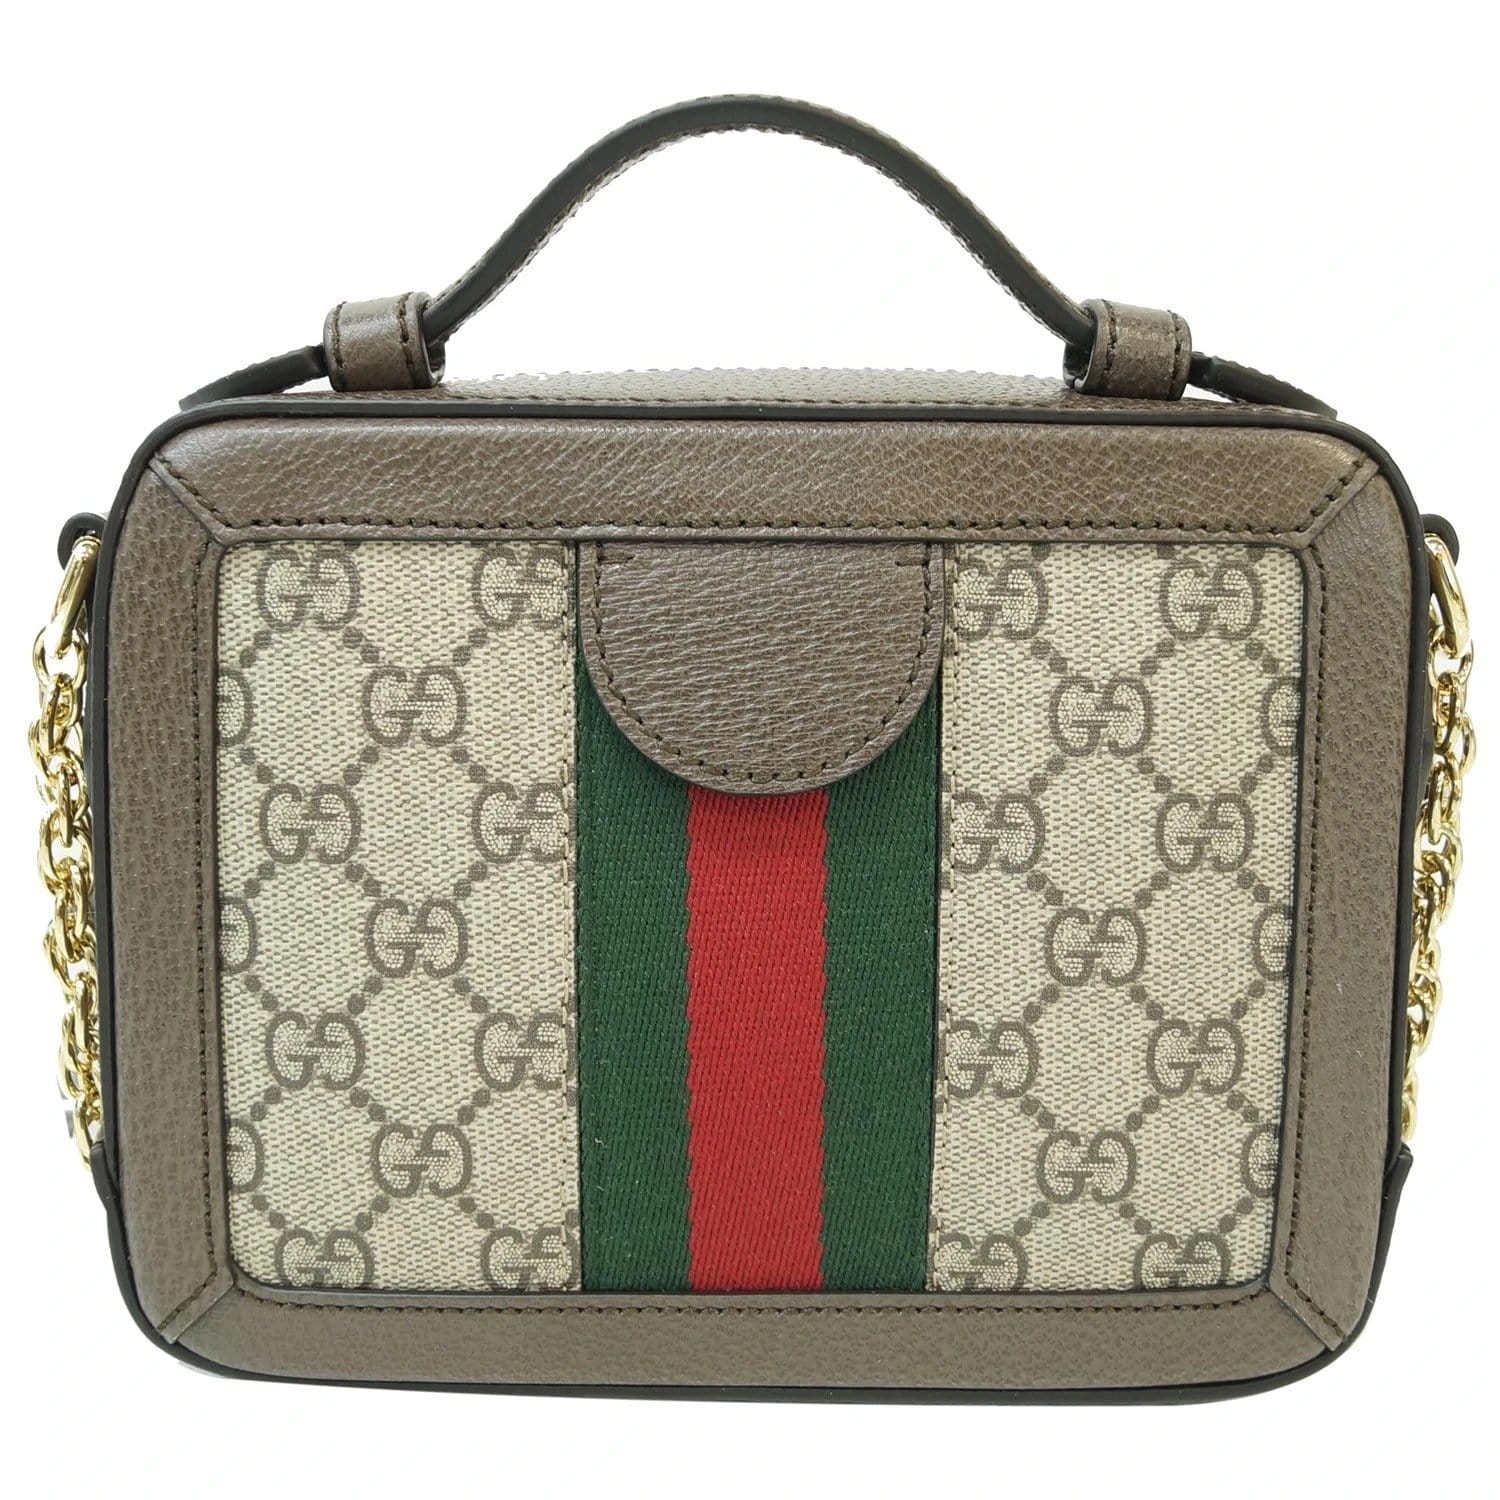 Gucci Ophidia GG Shoulder Bag Beige/Ebony